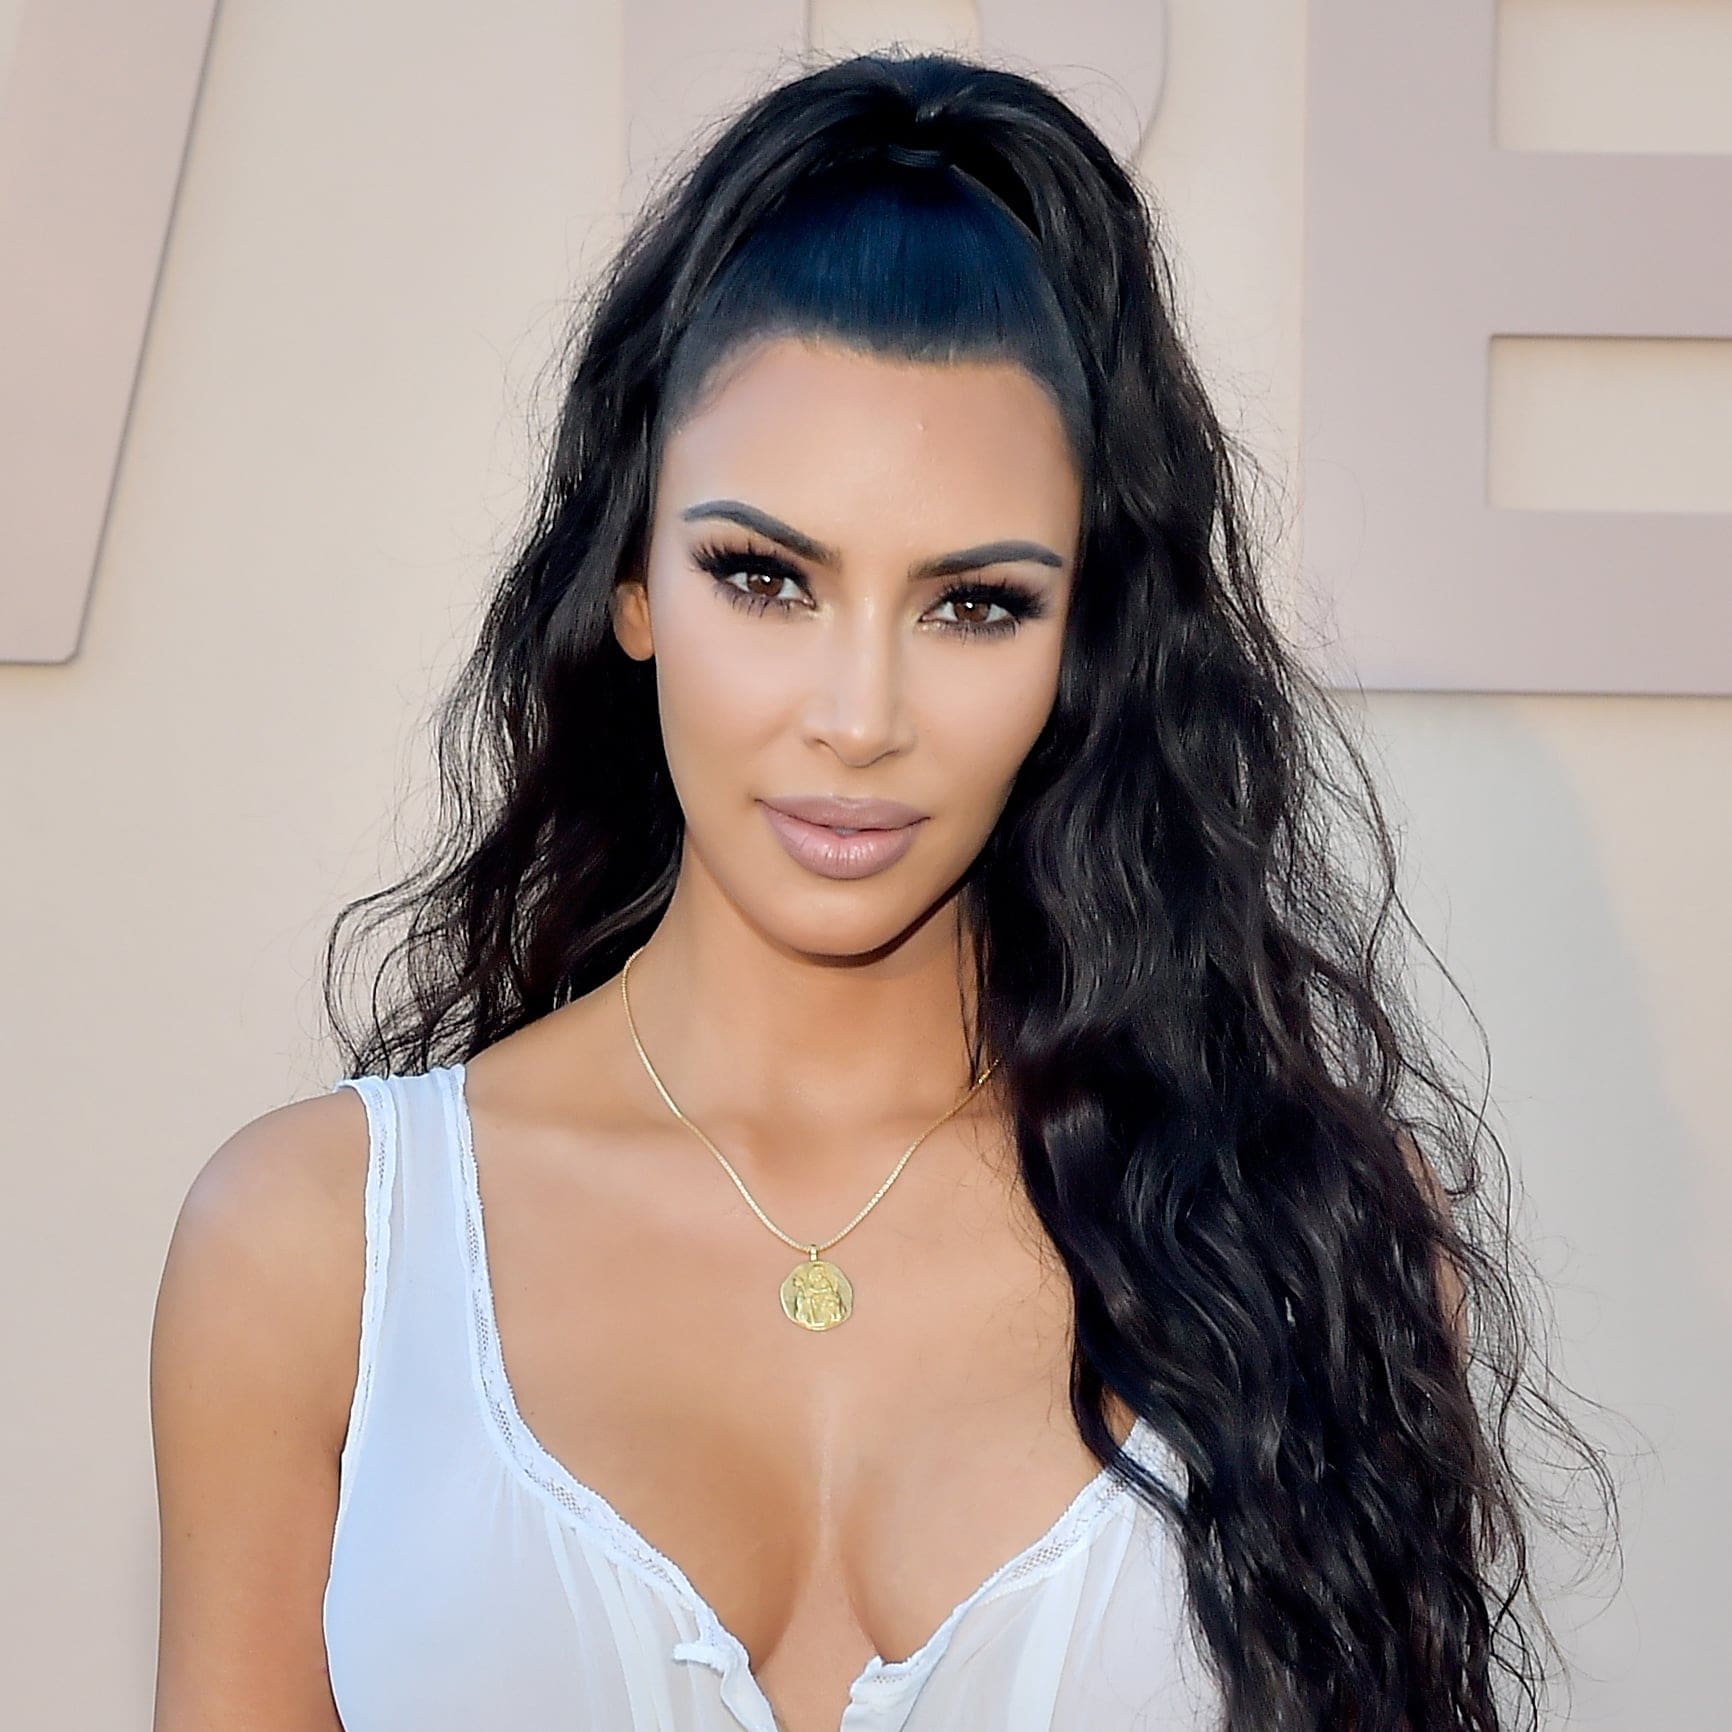 kim-kardashian-drops-important-update-on-julius-jones-case